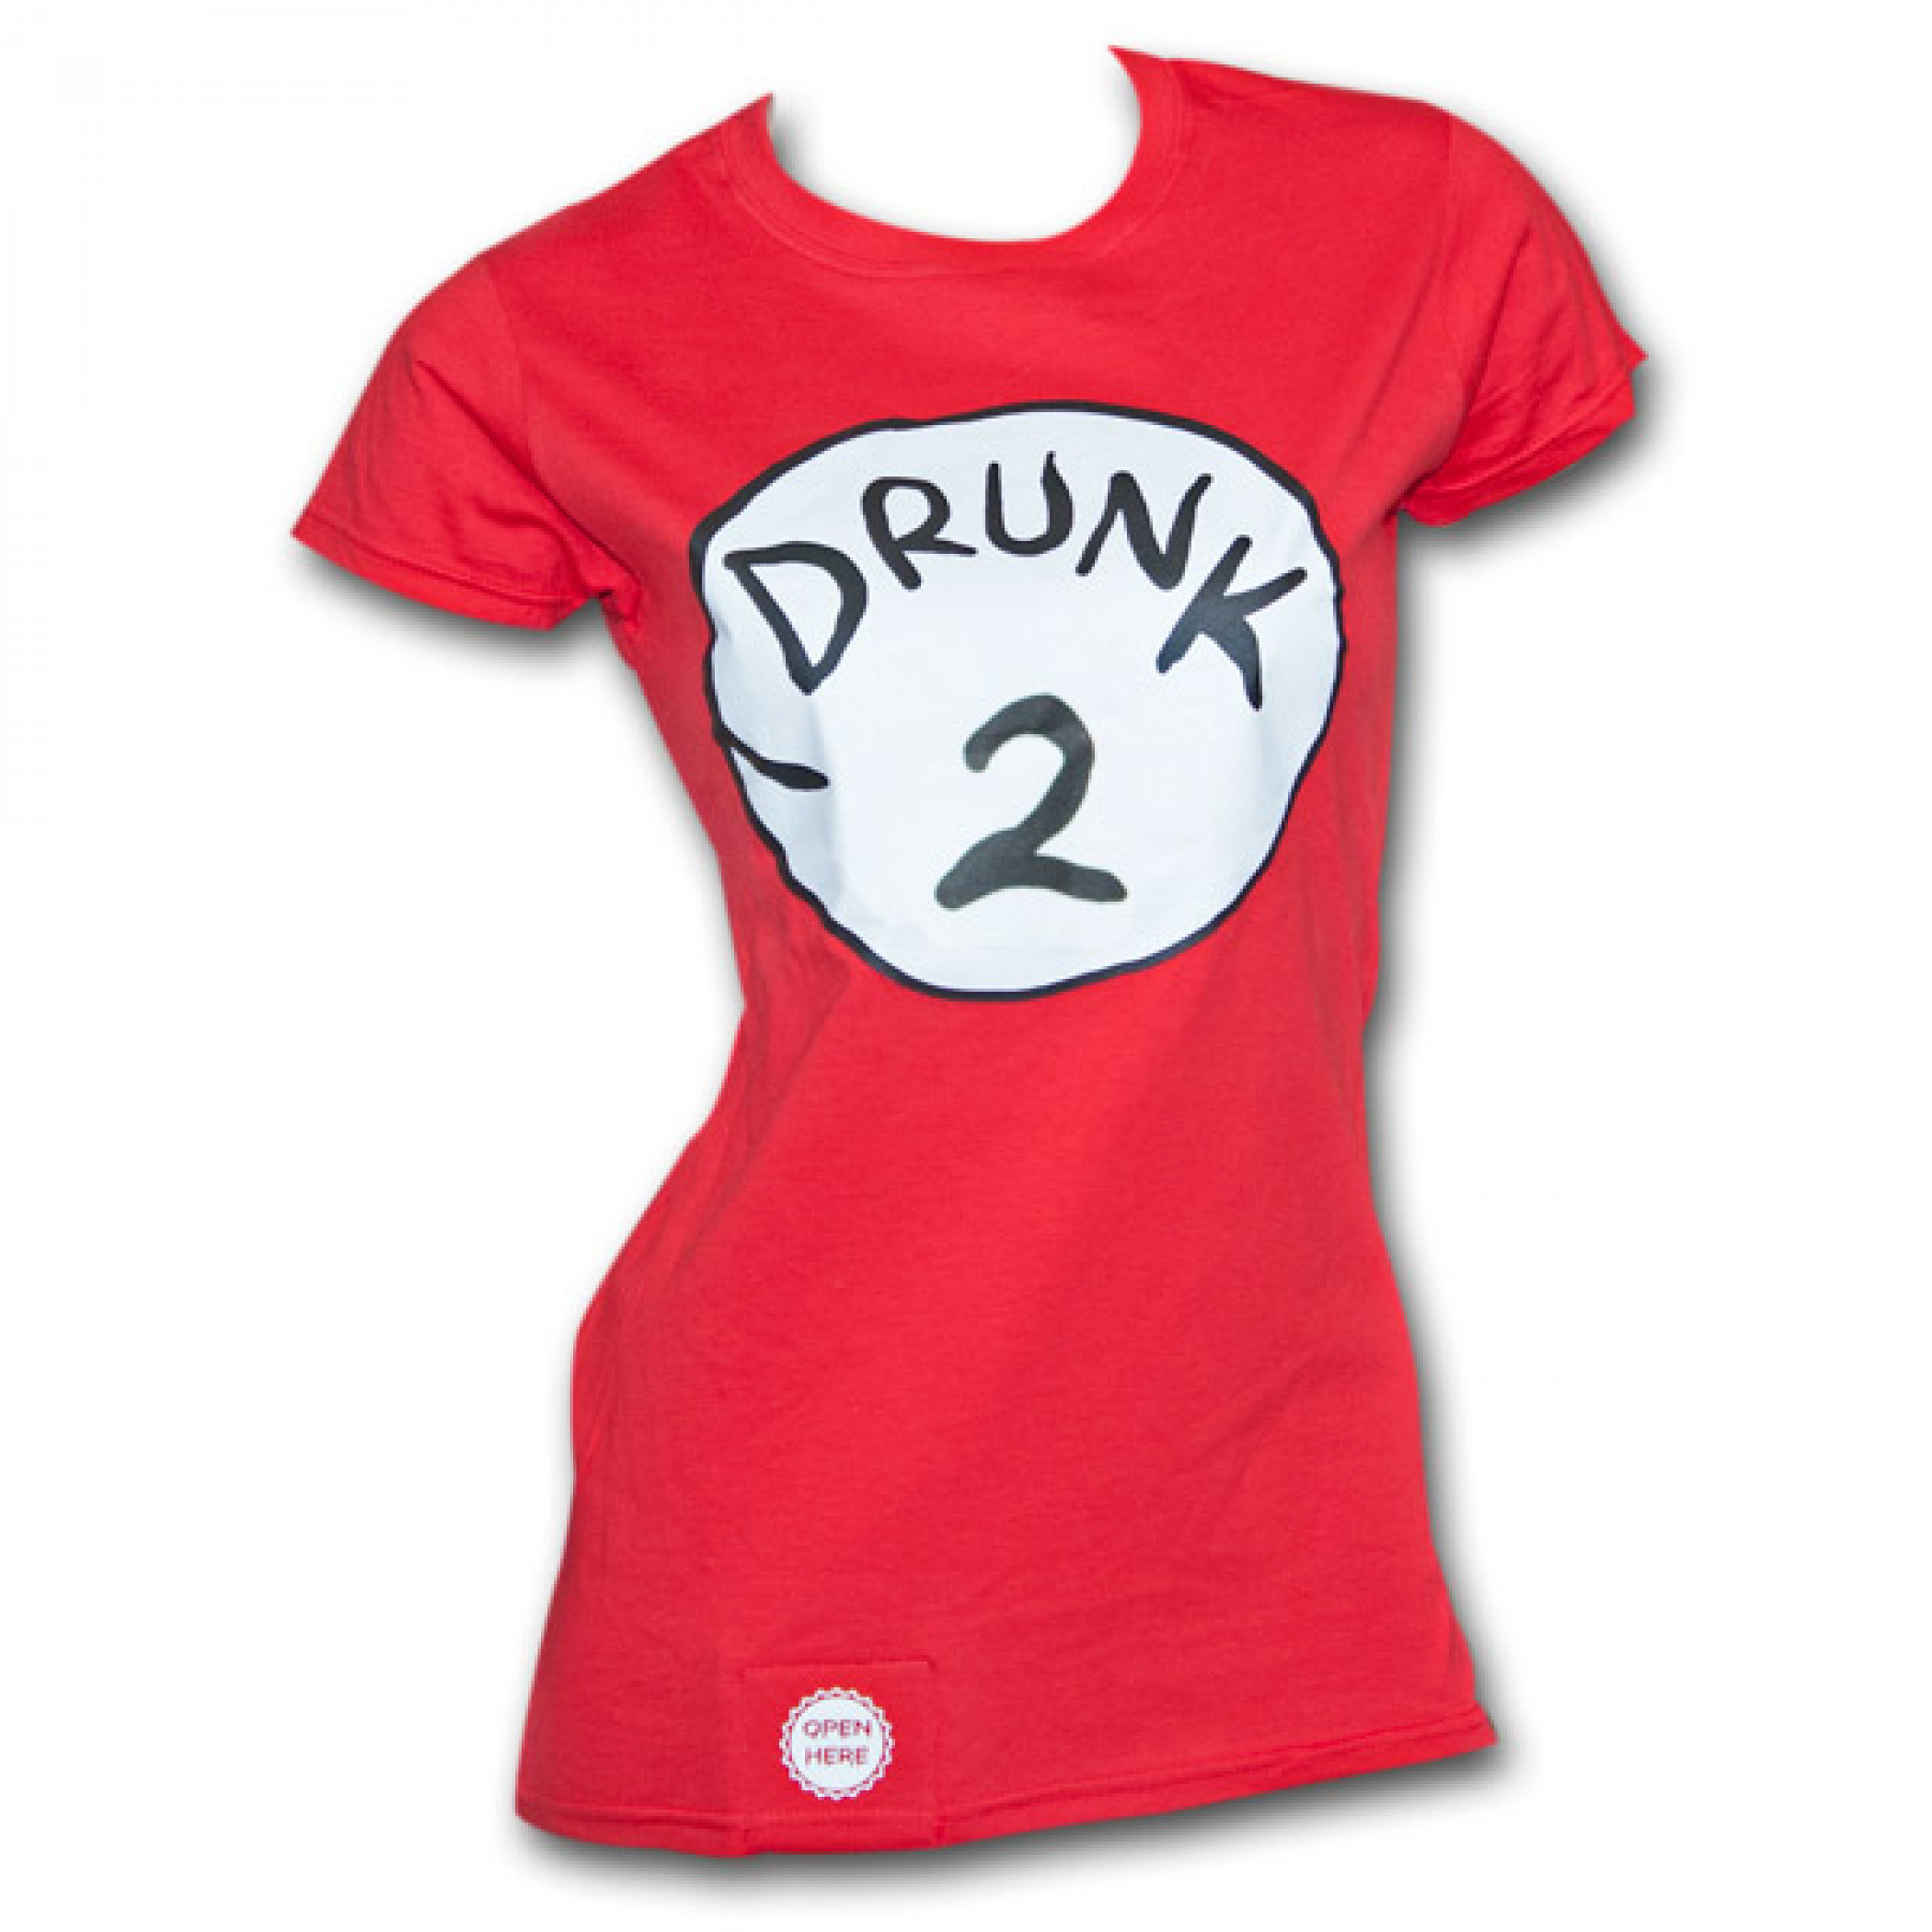 Drunk 2 Bottle Opener Juniors Red T-Shirt